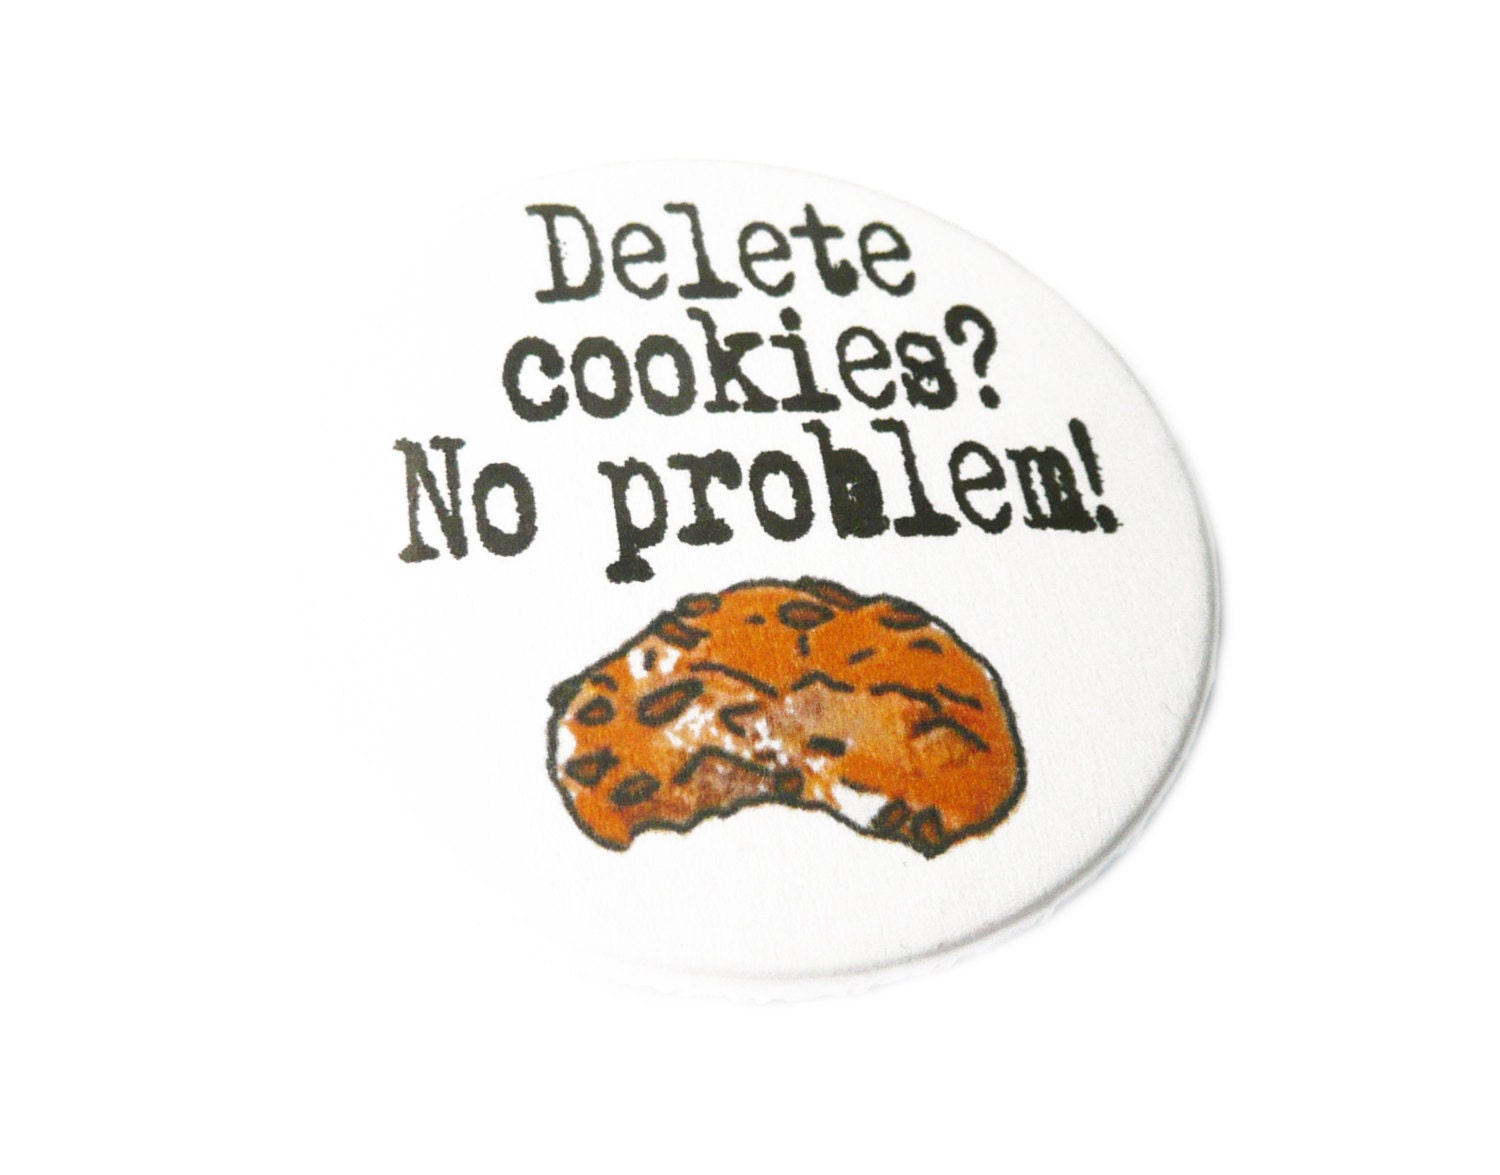 Delete cookies. Delites печенье. No cookies картинка. Why you deleted cookies. Remove cookies